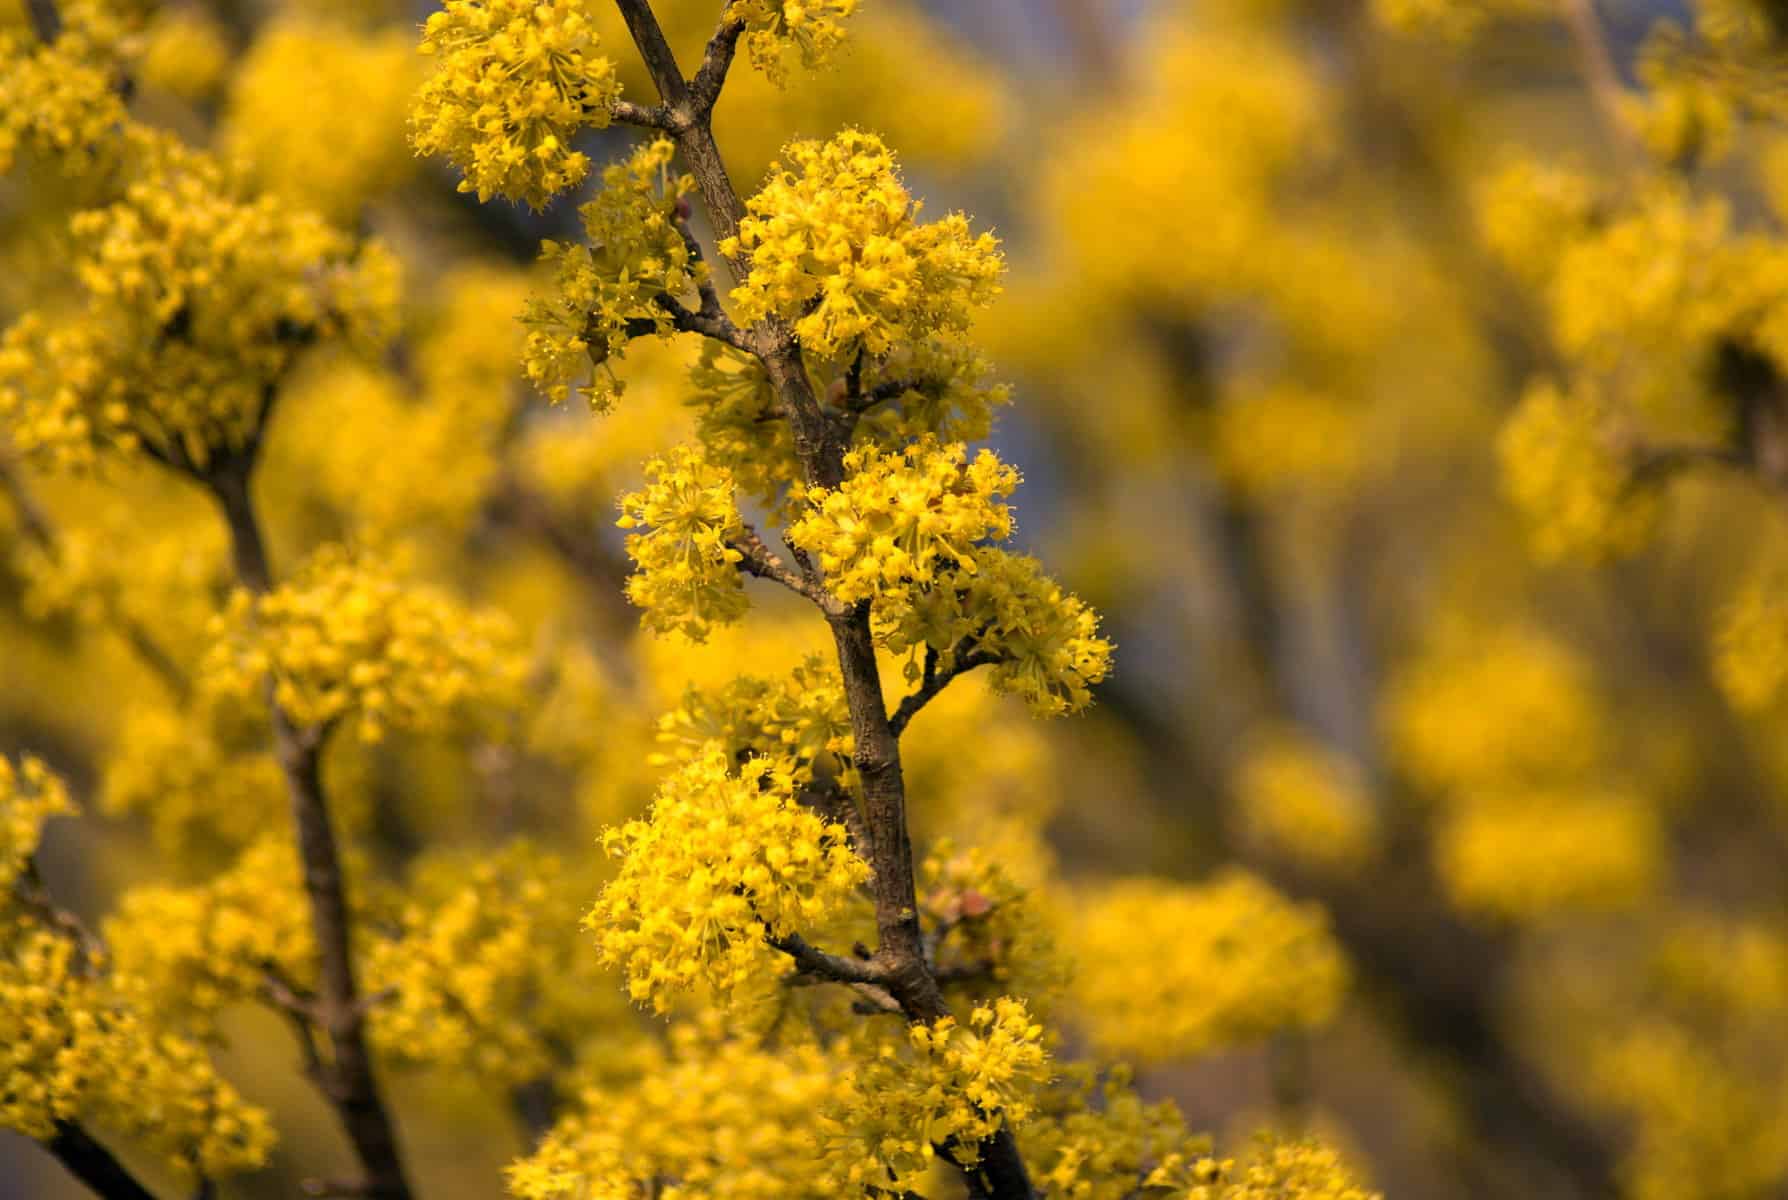 A close up of Cornus Mas flowers on a tree.